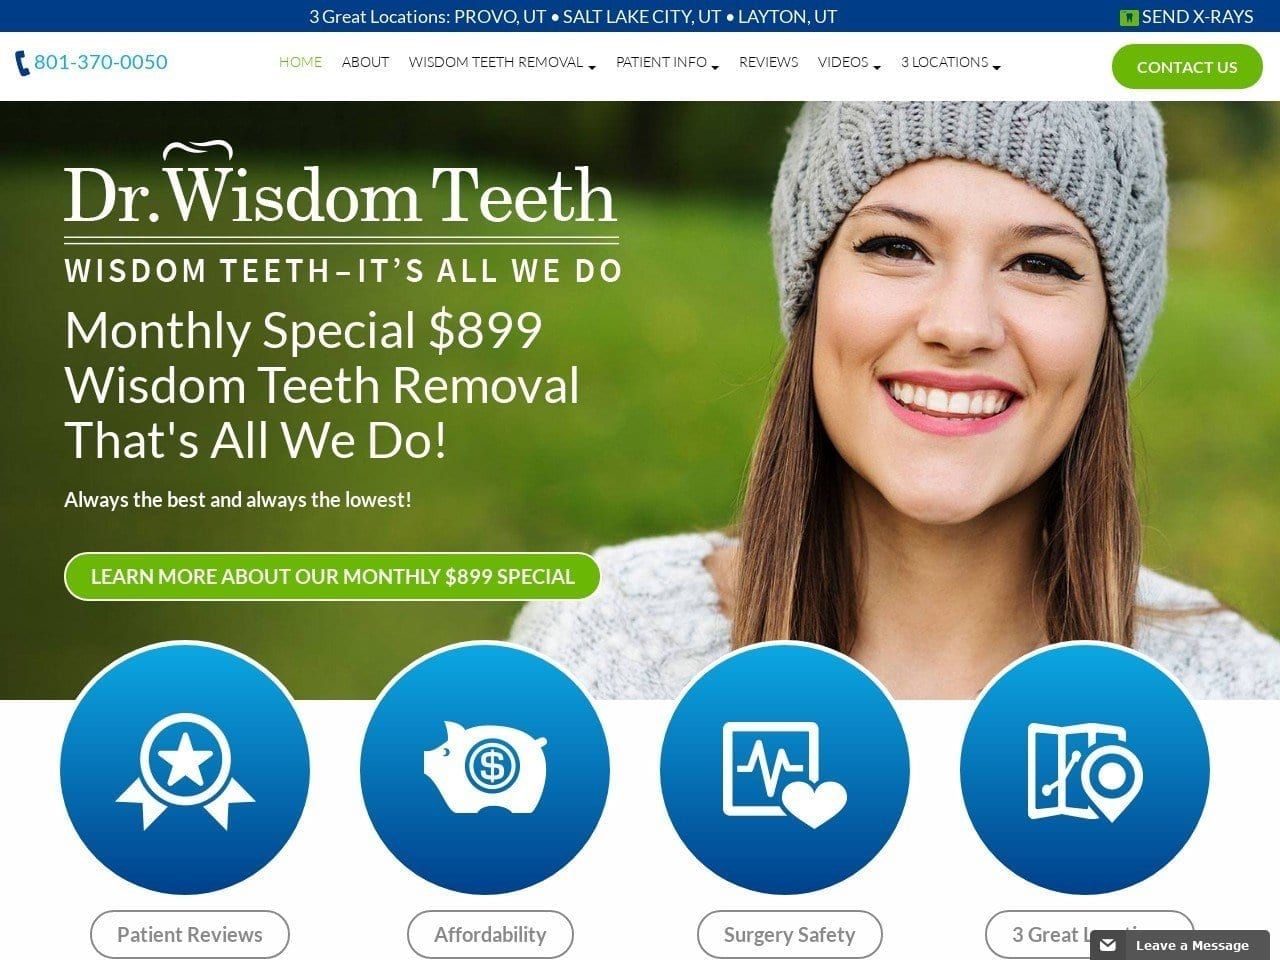 Wisdom Teeth Only Website Screenshot from drwisdomteeth.com